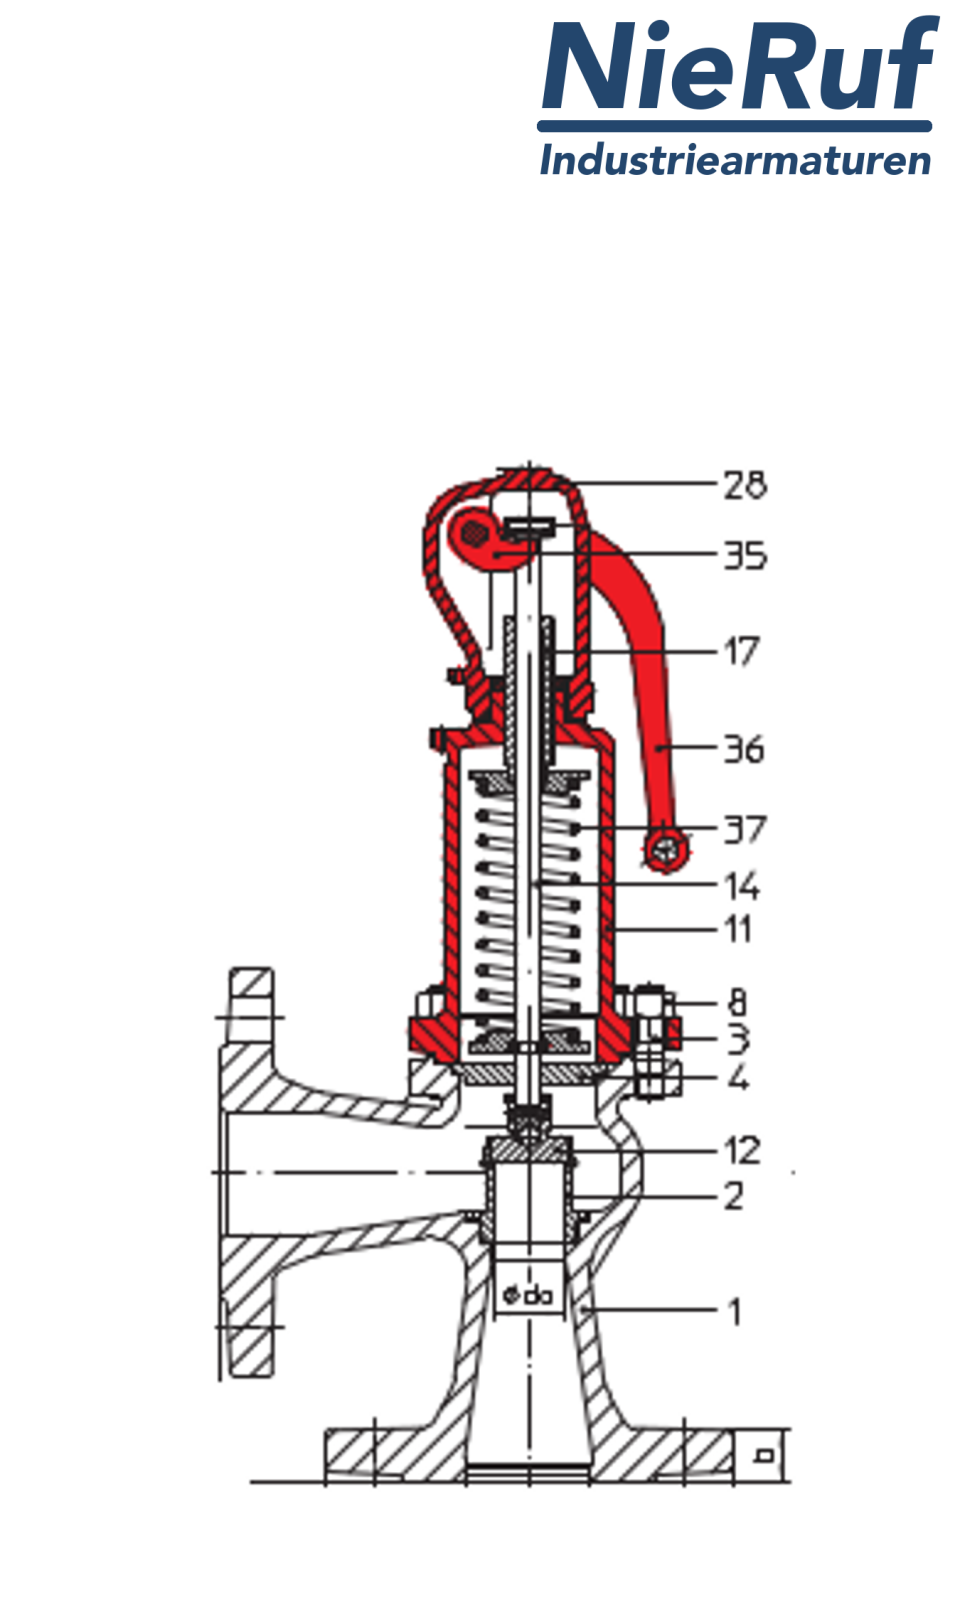 flange-safety valve DN20/DN20 SF02, cast steel 1.0619+N FPM, with lever